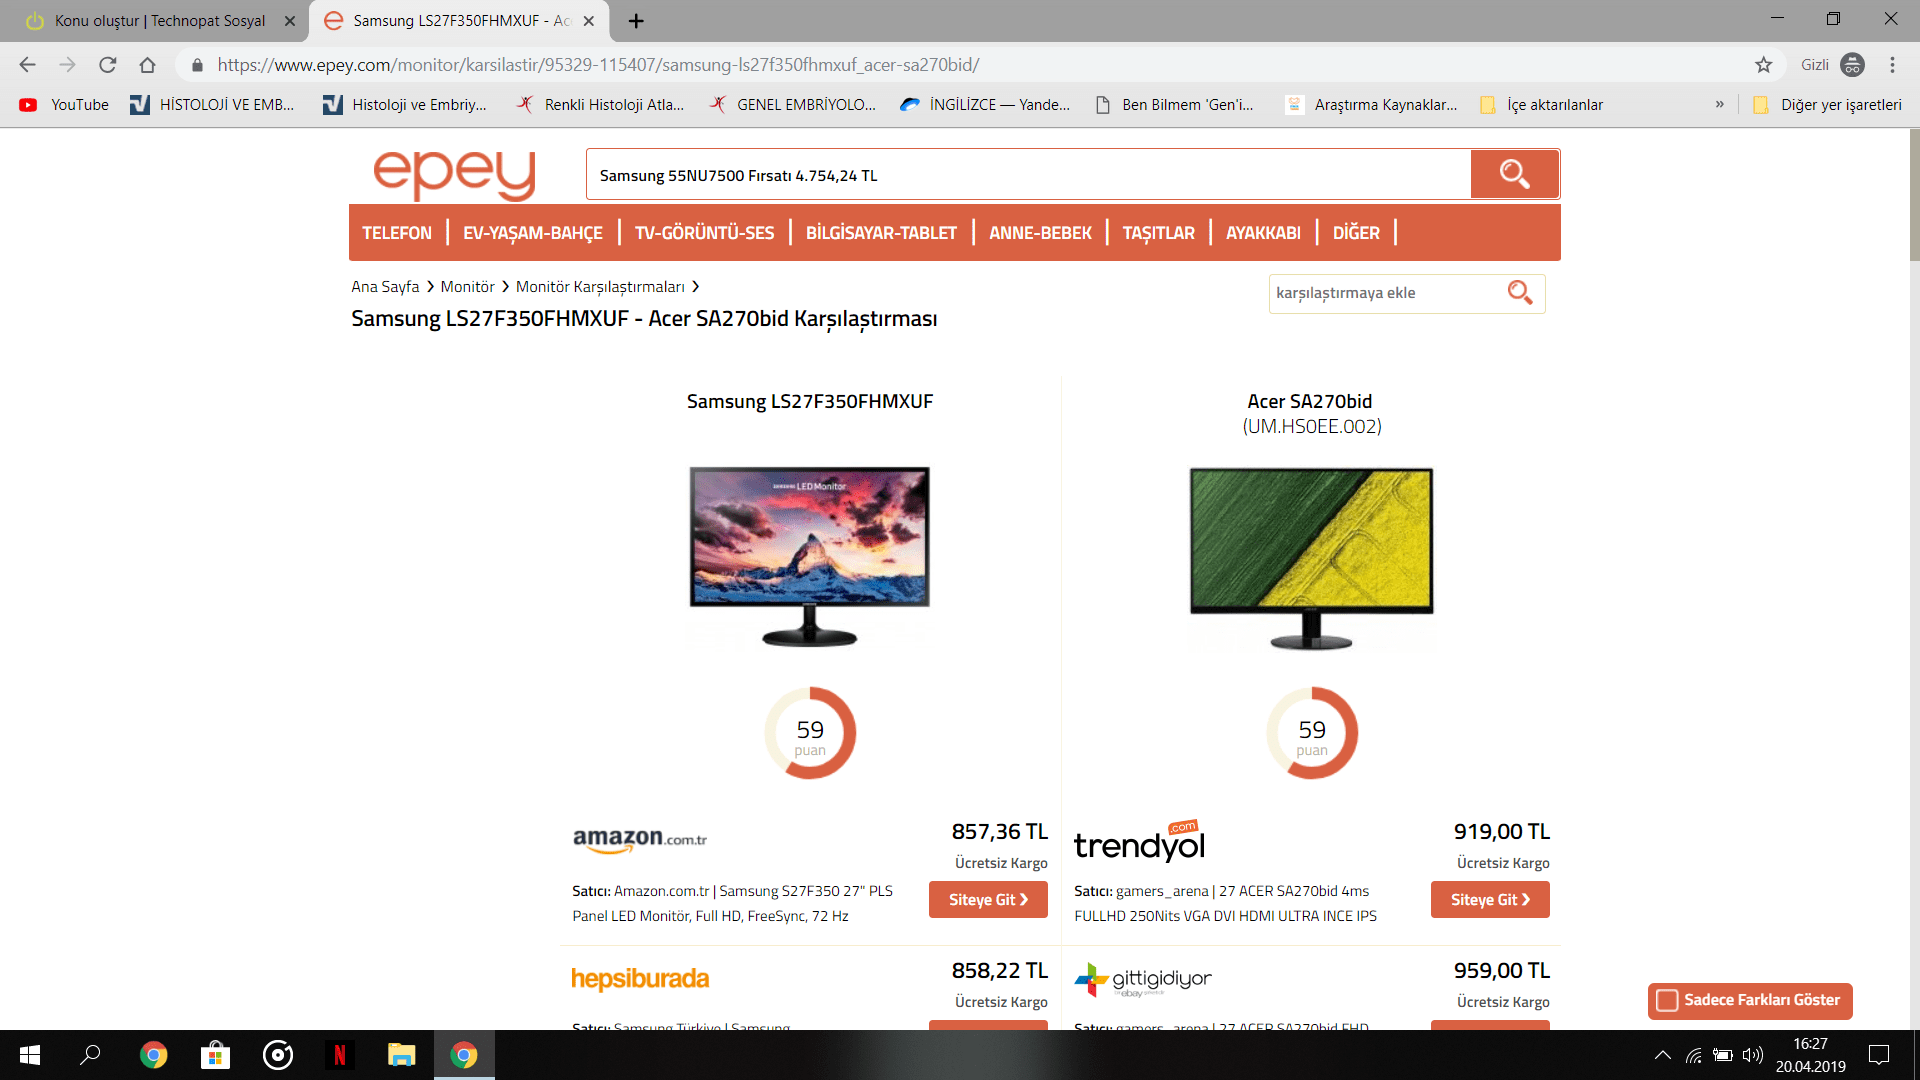 Acer SA270bid vs Samsung LS27F350FHMXUF | Technopat Sosyal